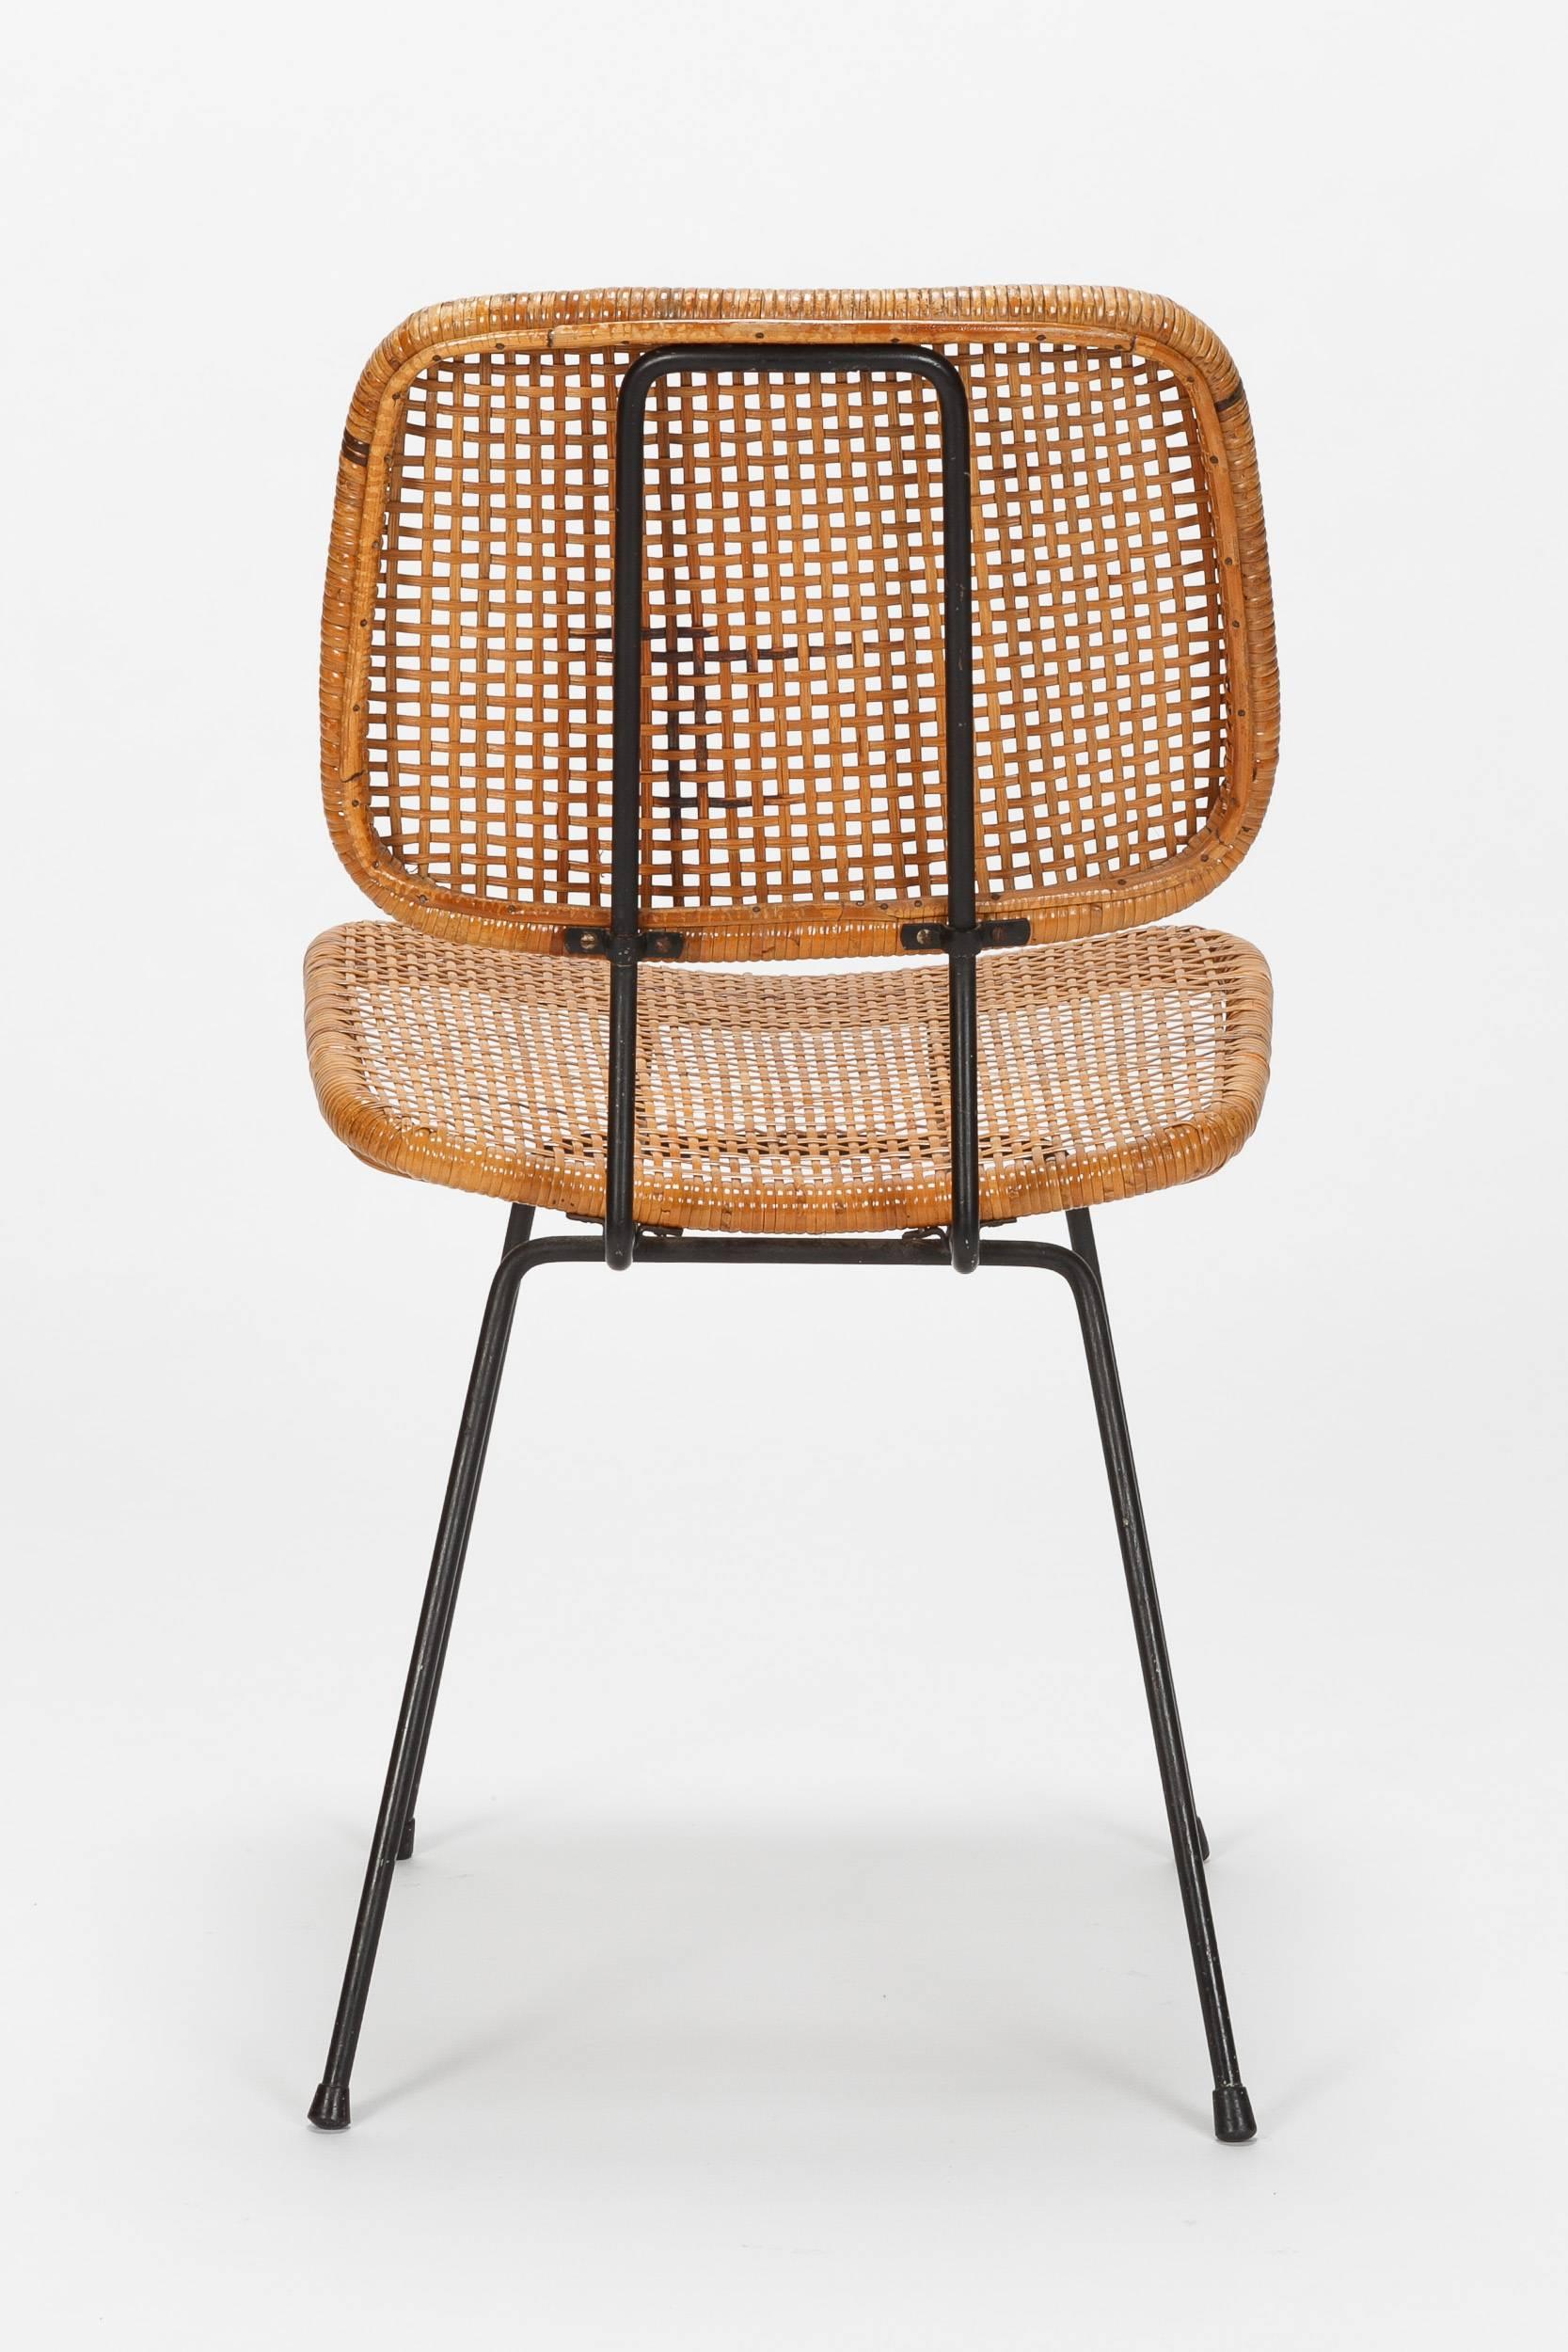 Mid-20th Century Dutch Dirk van Sliedregt Chair 550 by Rohé Noordwolde, 1950s